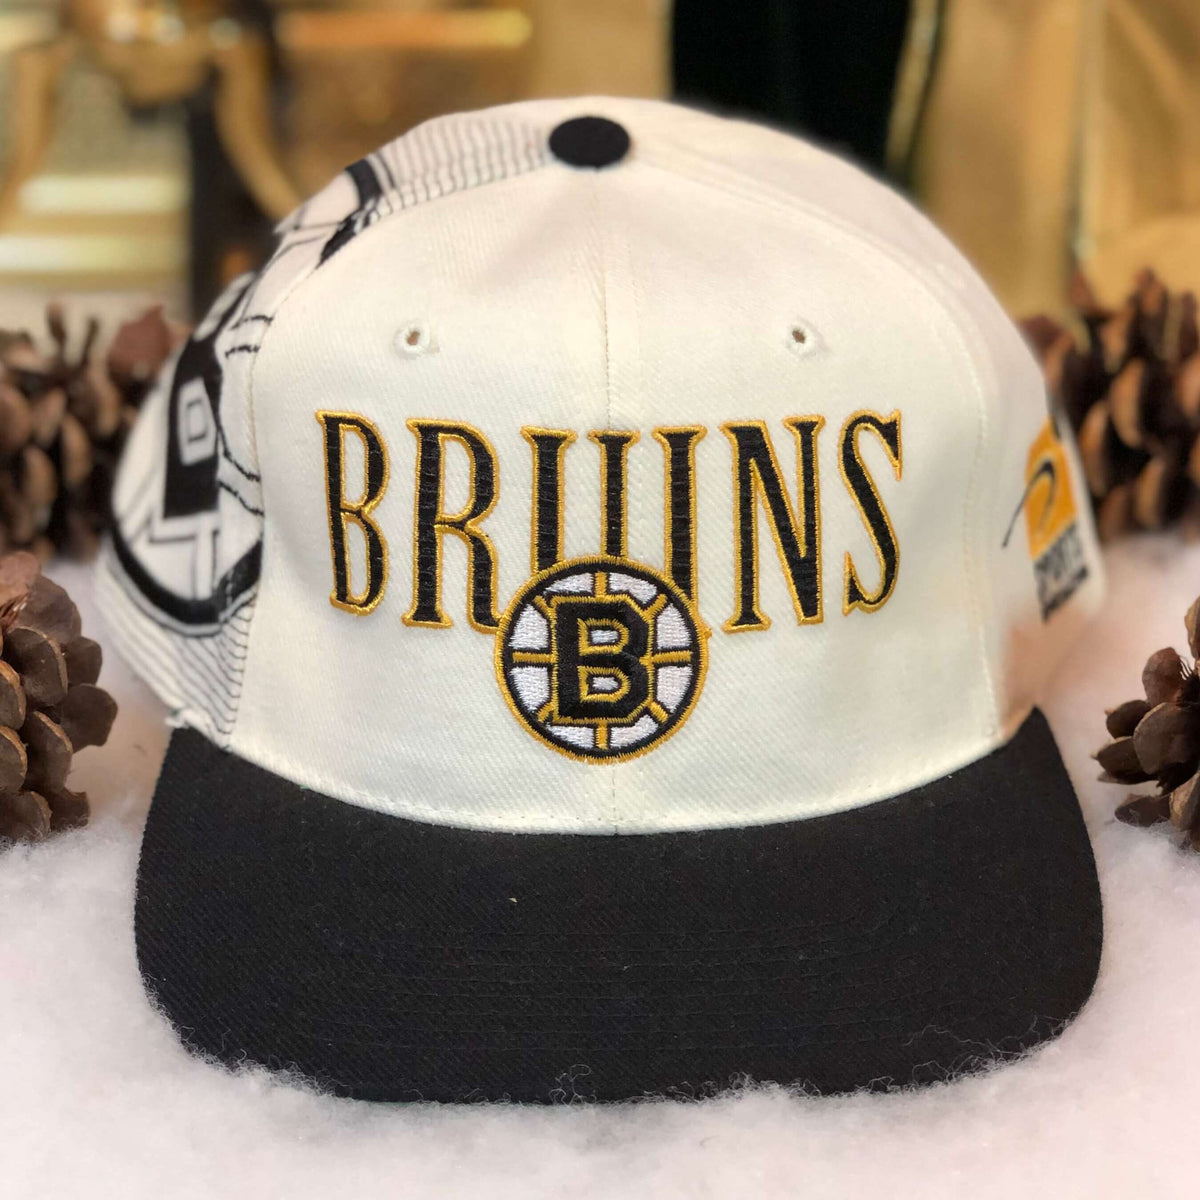 Boston Bruins NHL Sports Specialties Vintage Snapback Hat